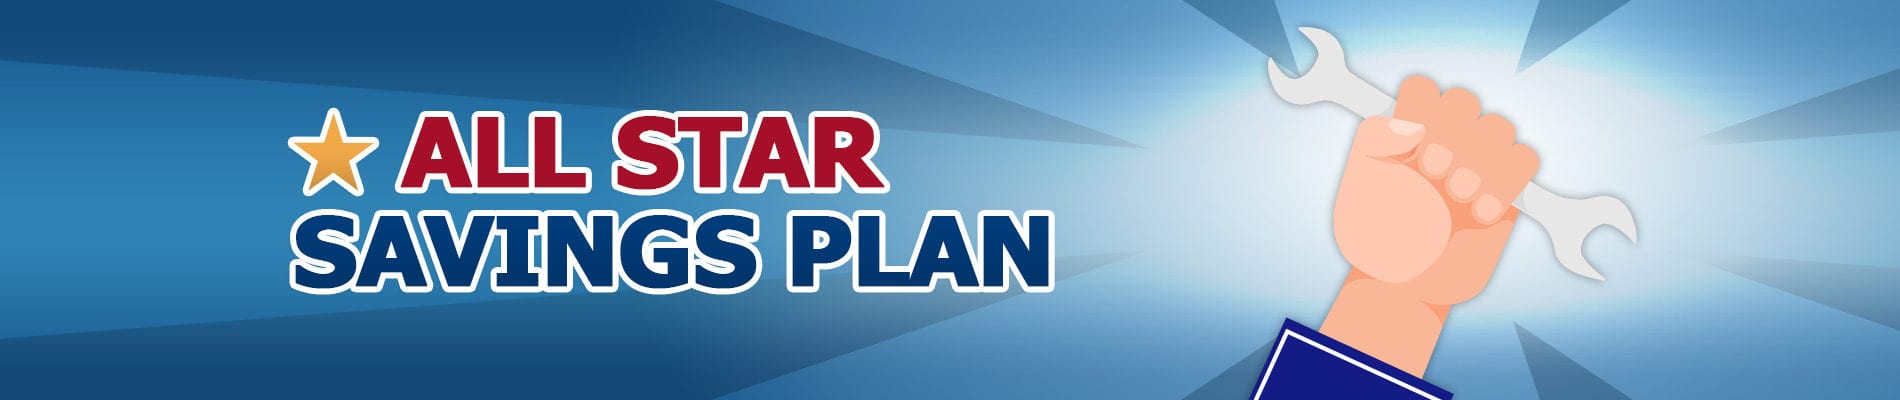 All Star Savings Plan